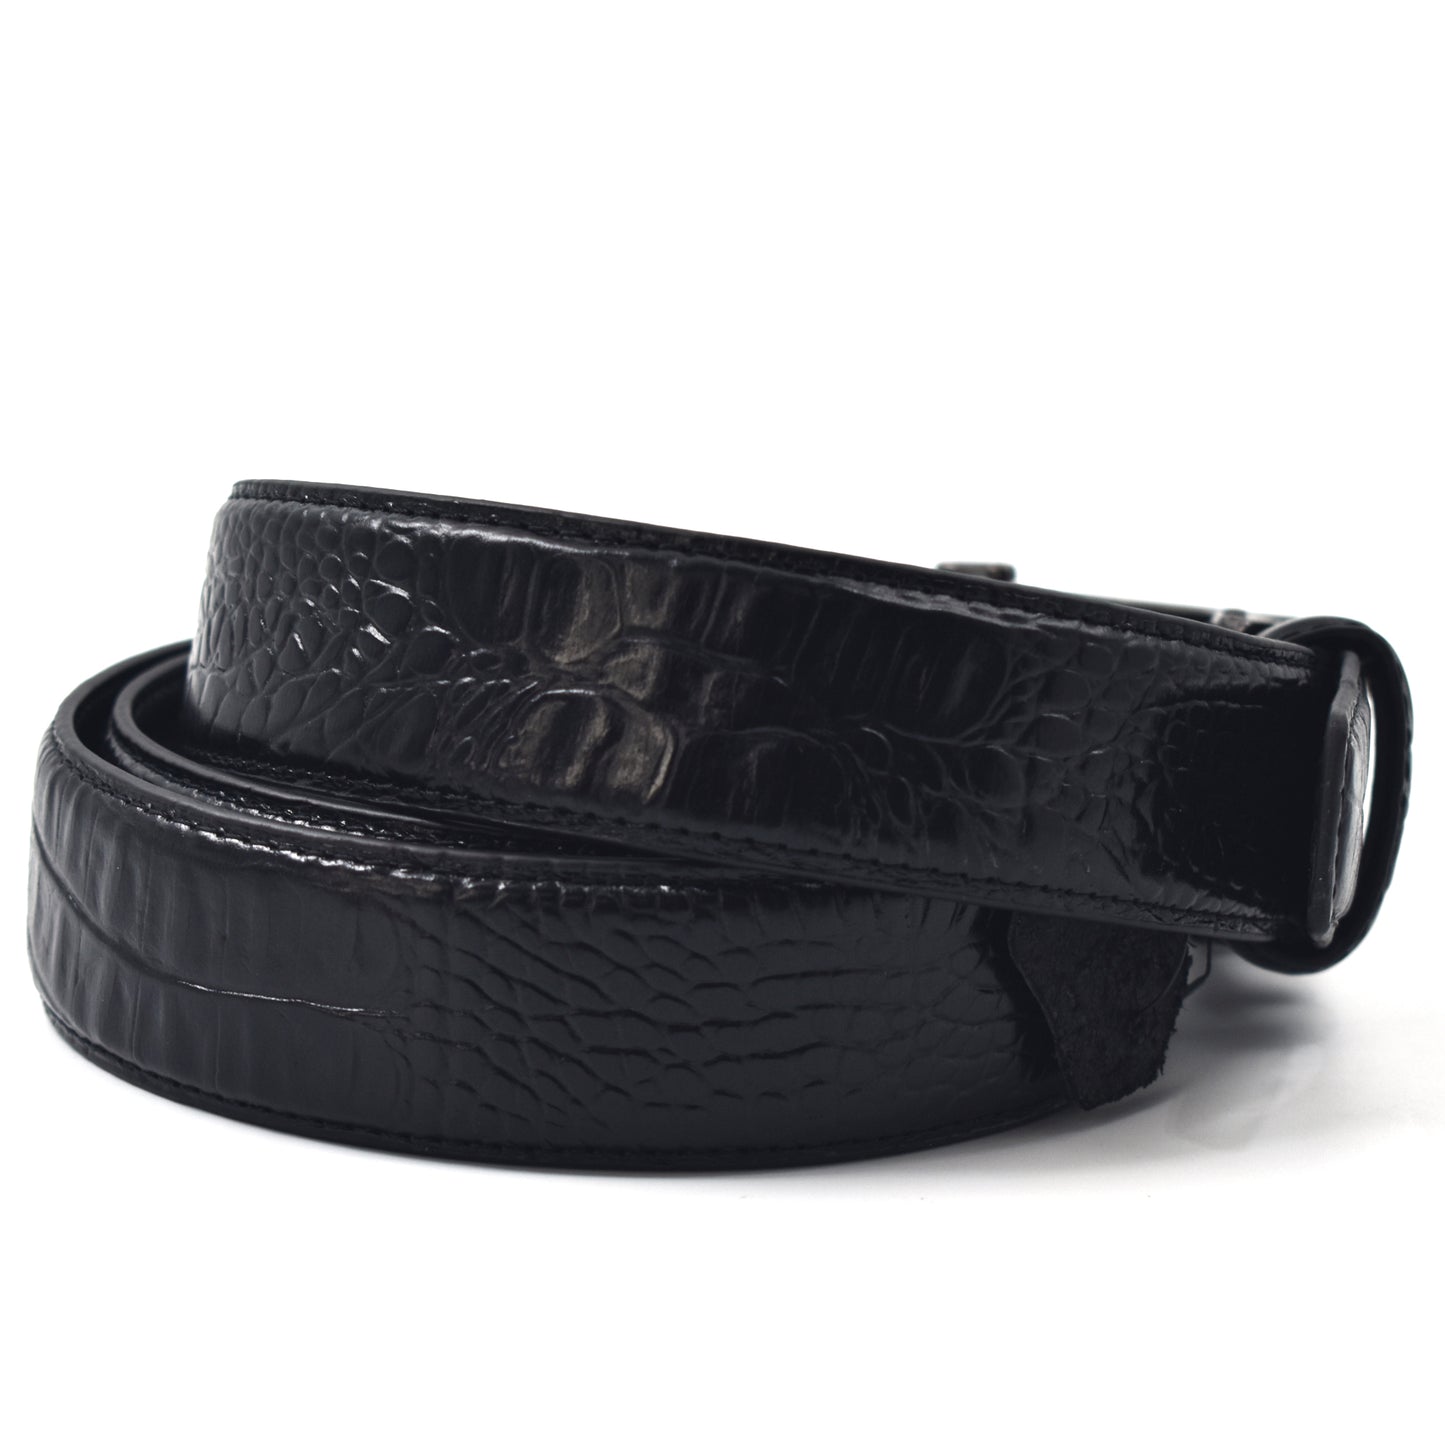 Gear Buckles | Original Leather | Premium Quality Belt | ORGN Belt 64